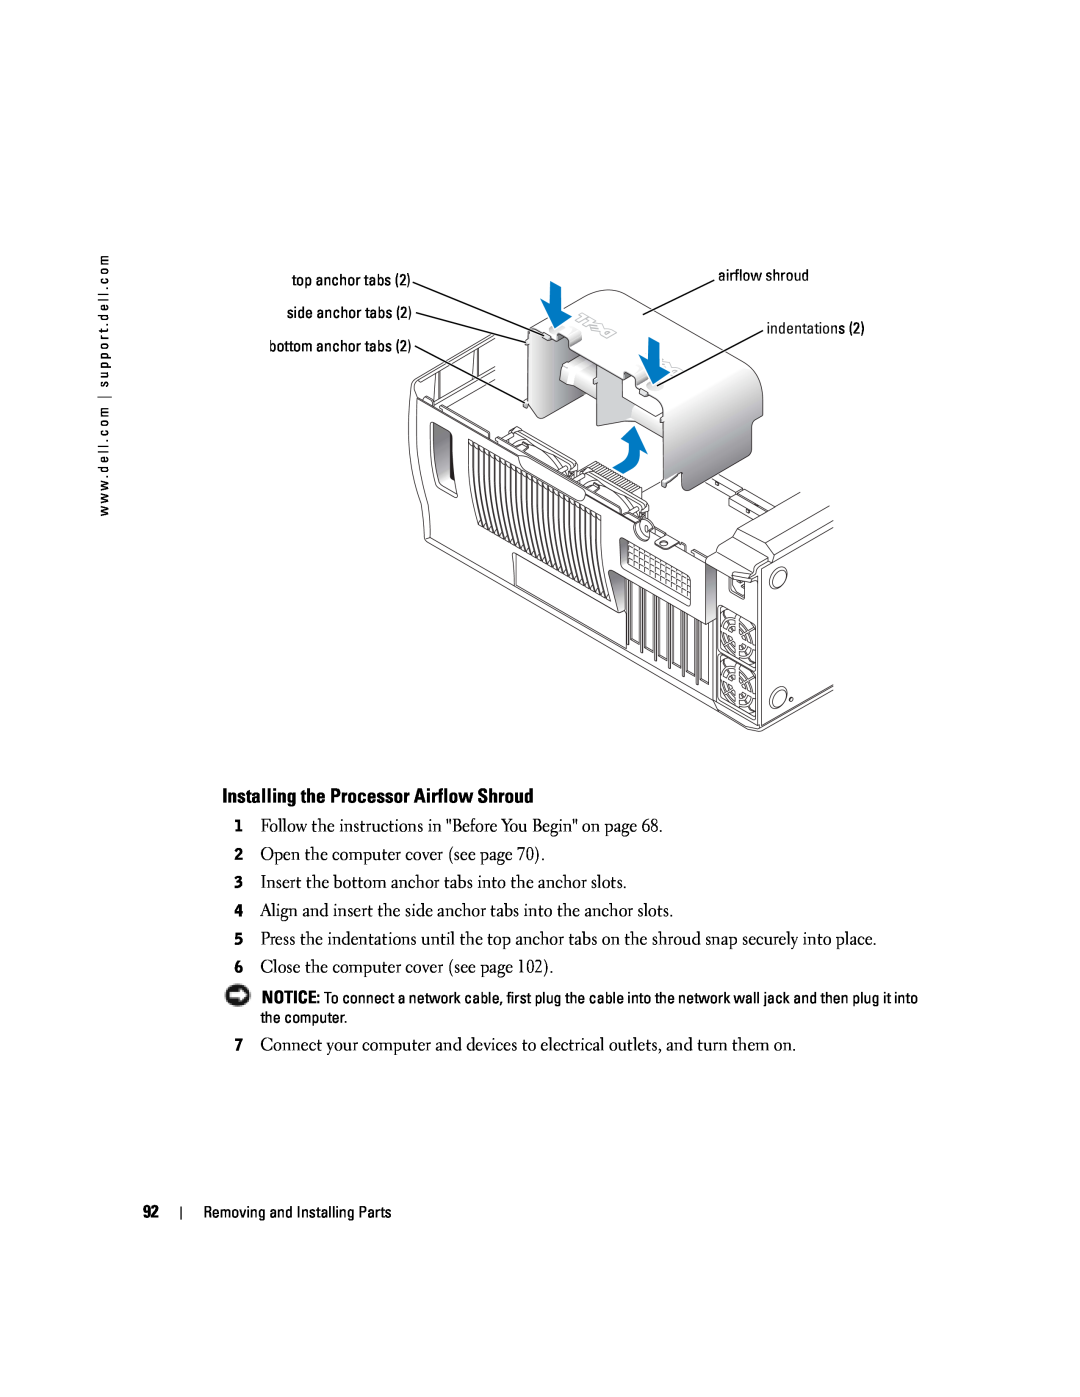 Dell XPS manual Installing the Processor Airflow Shroud, airflow shroud 